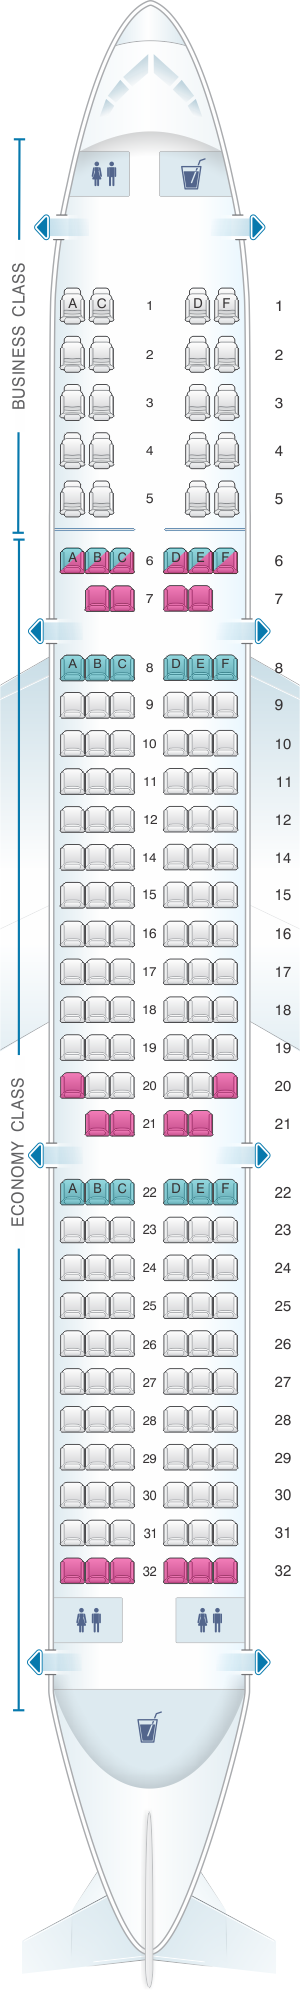 Air India Seating Chart